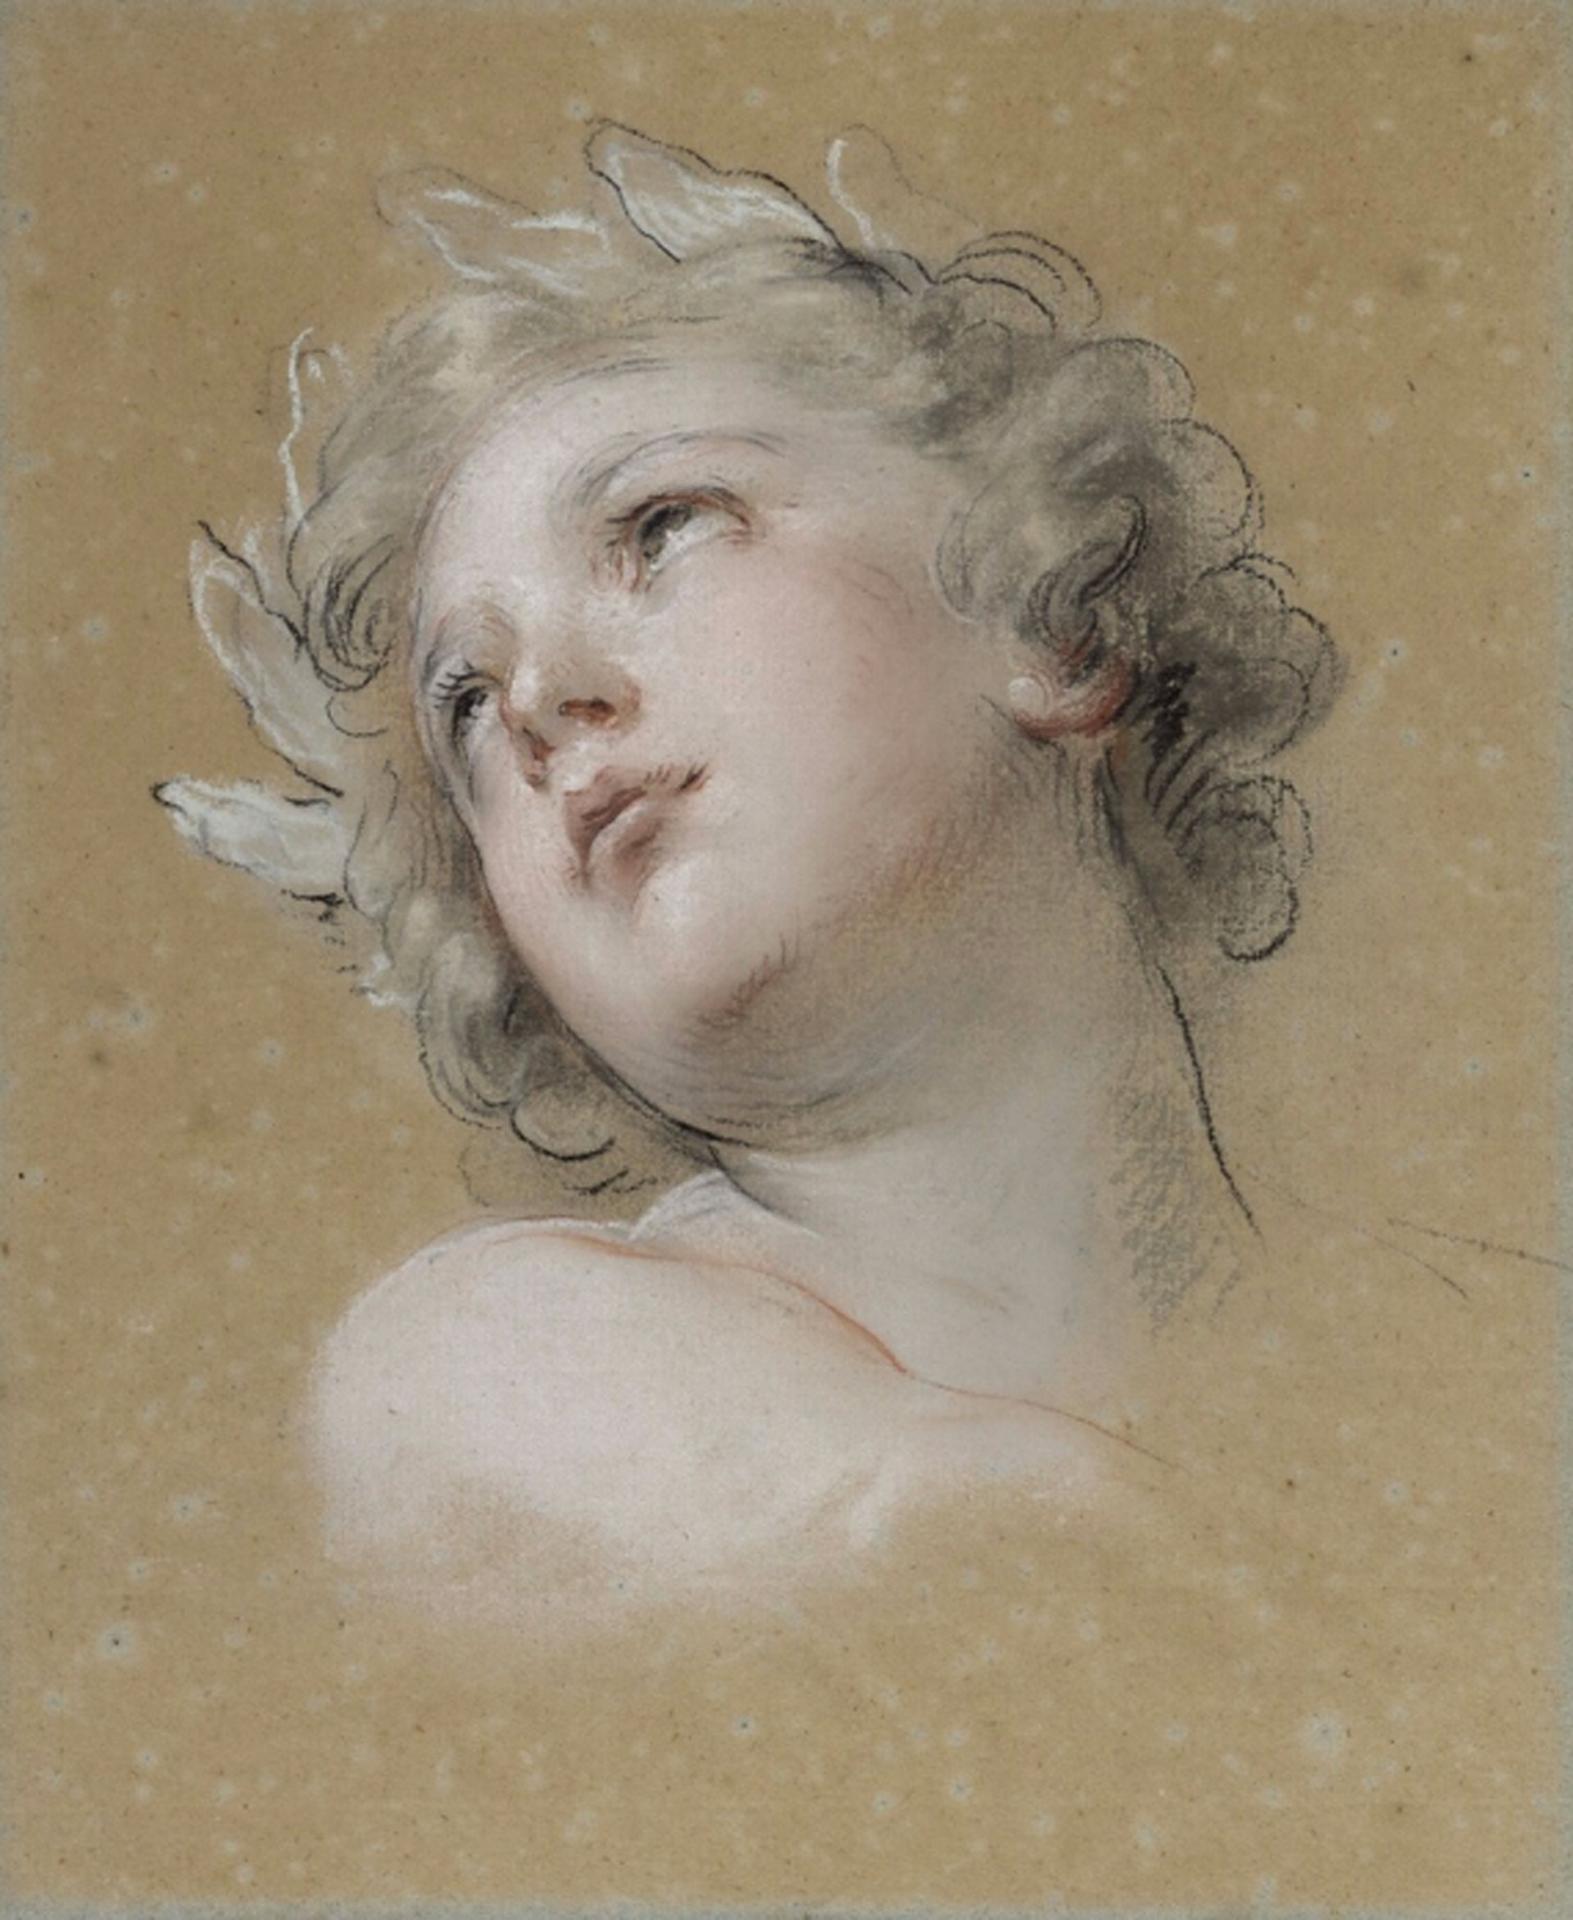 Portrait of Marie Antoinette Painting by Jean-Baptiste Andre Gautier DAgoty  - Pixels Merch